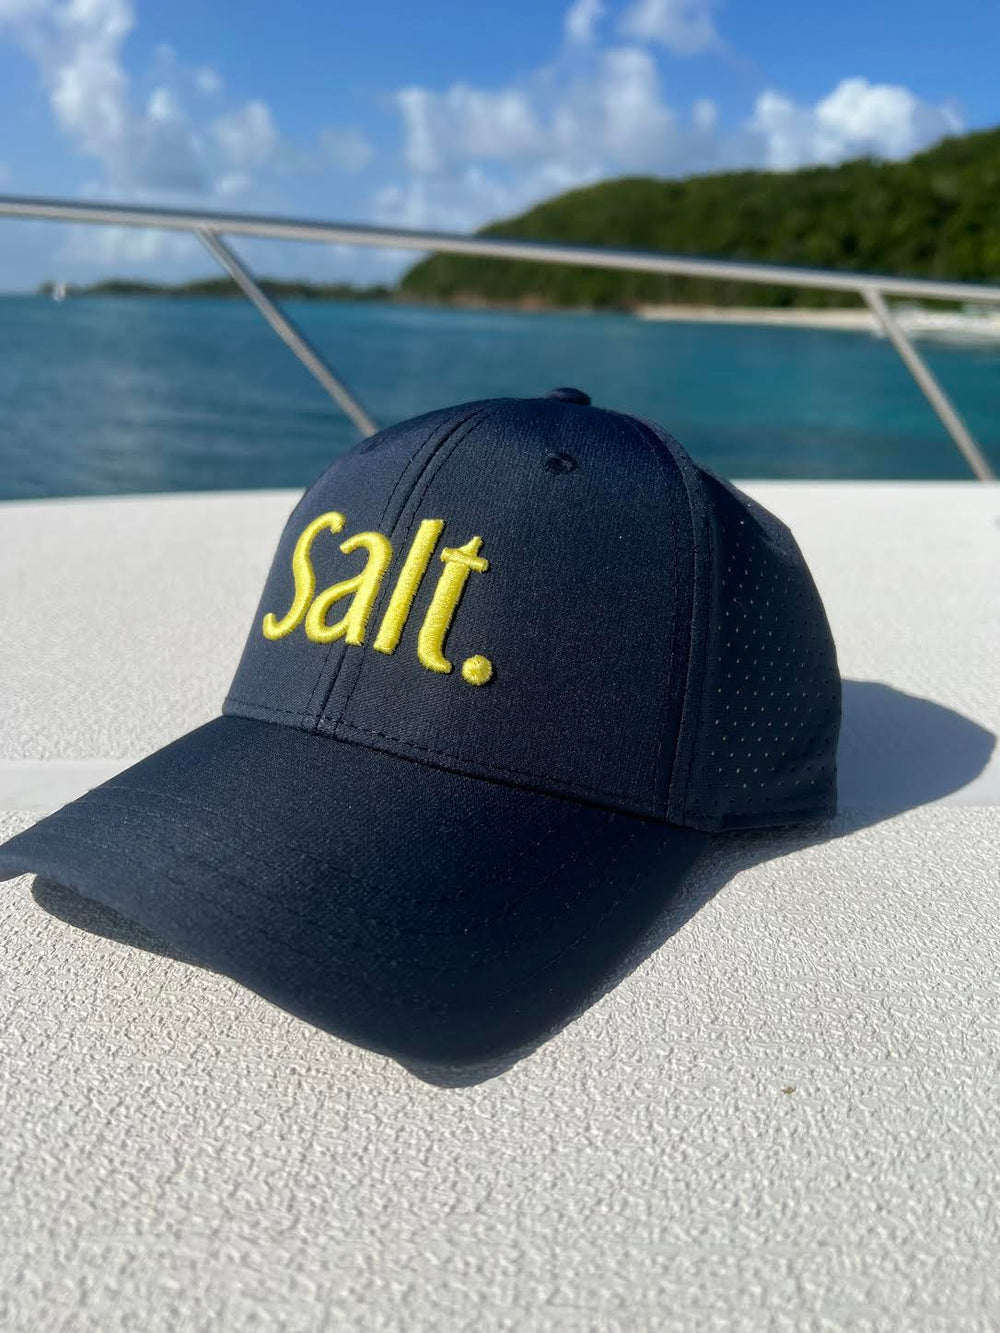 Salt Hat